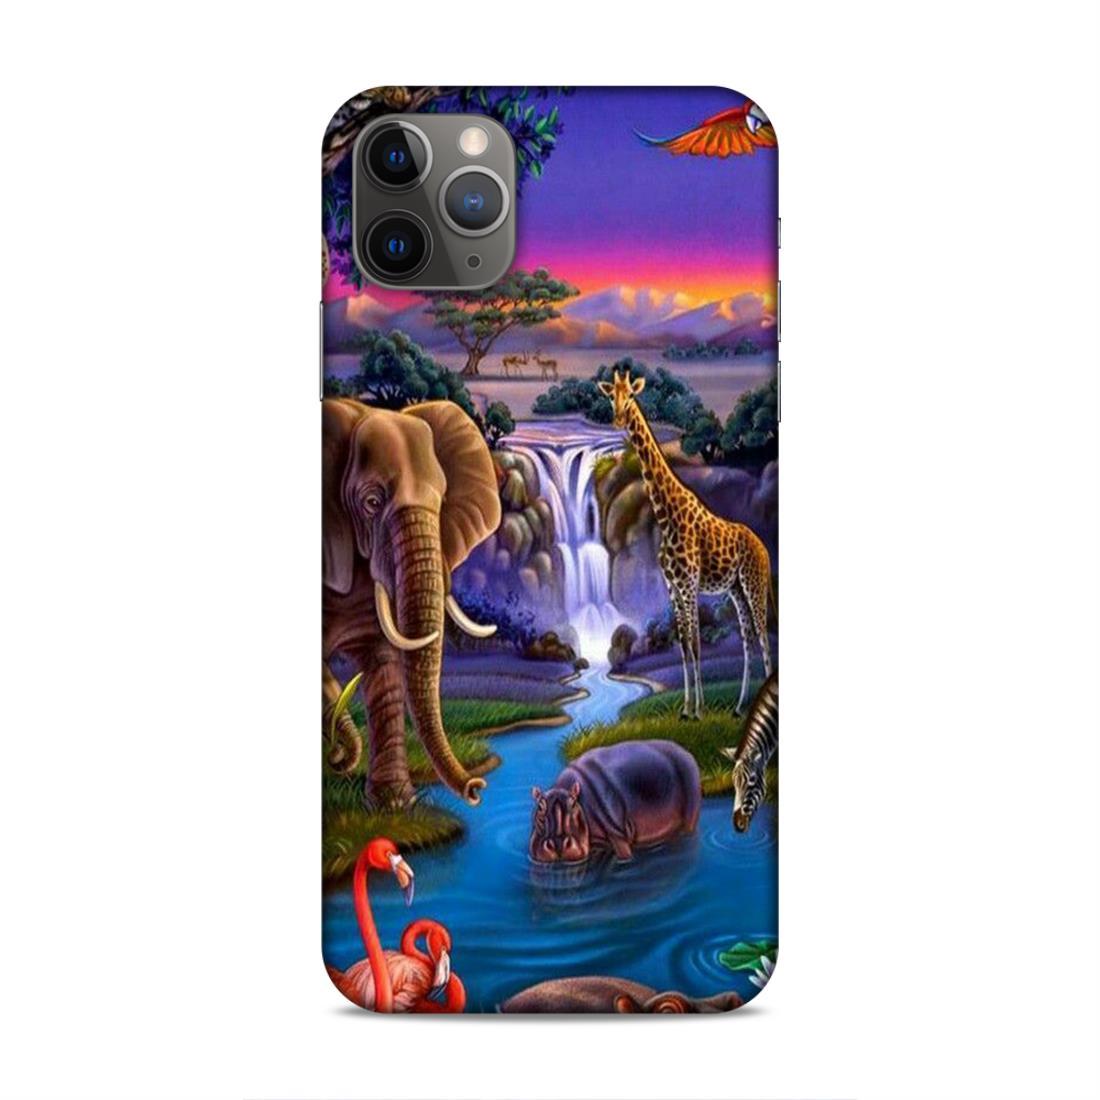 Jungle Art iPhone 11 Pro Max Mobile Cover